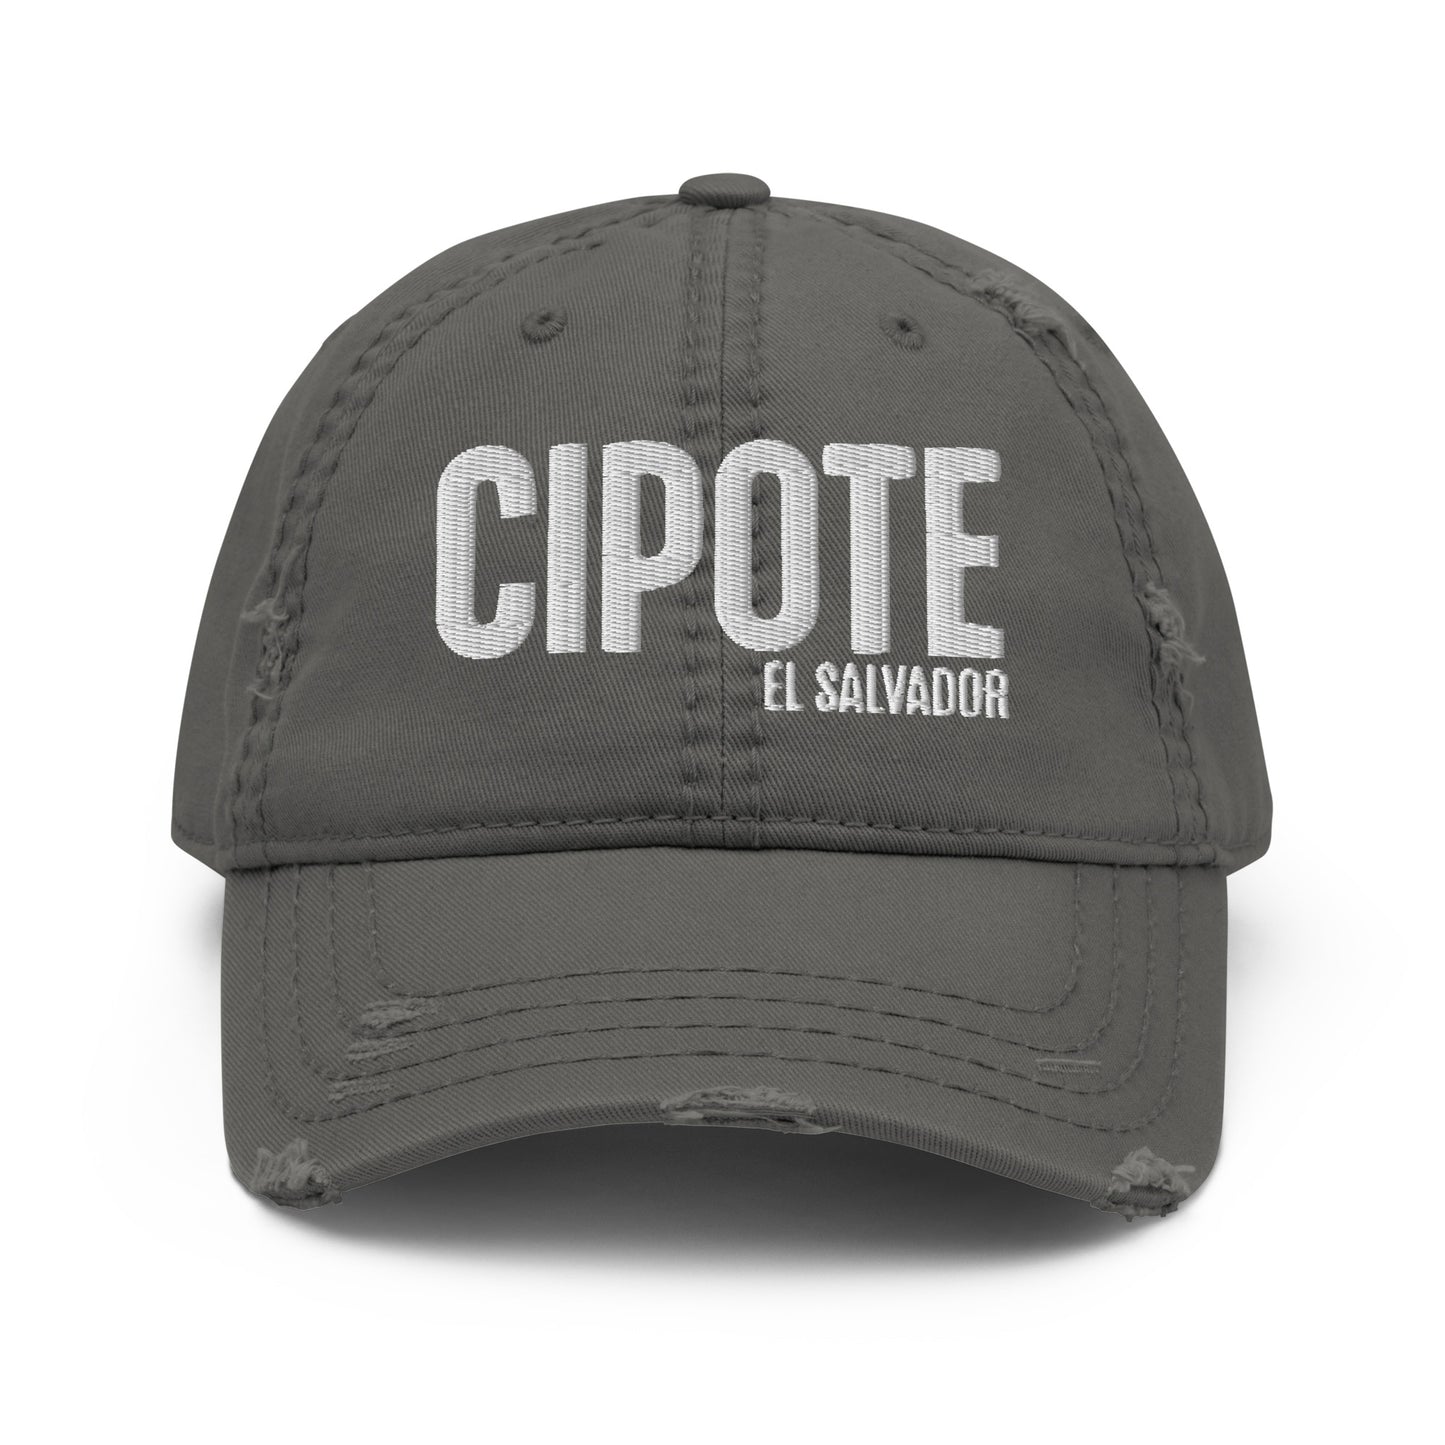 Cipote Distressed Hat